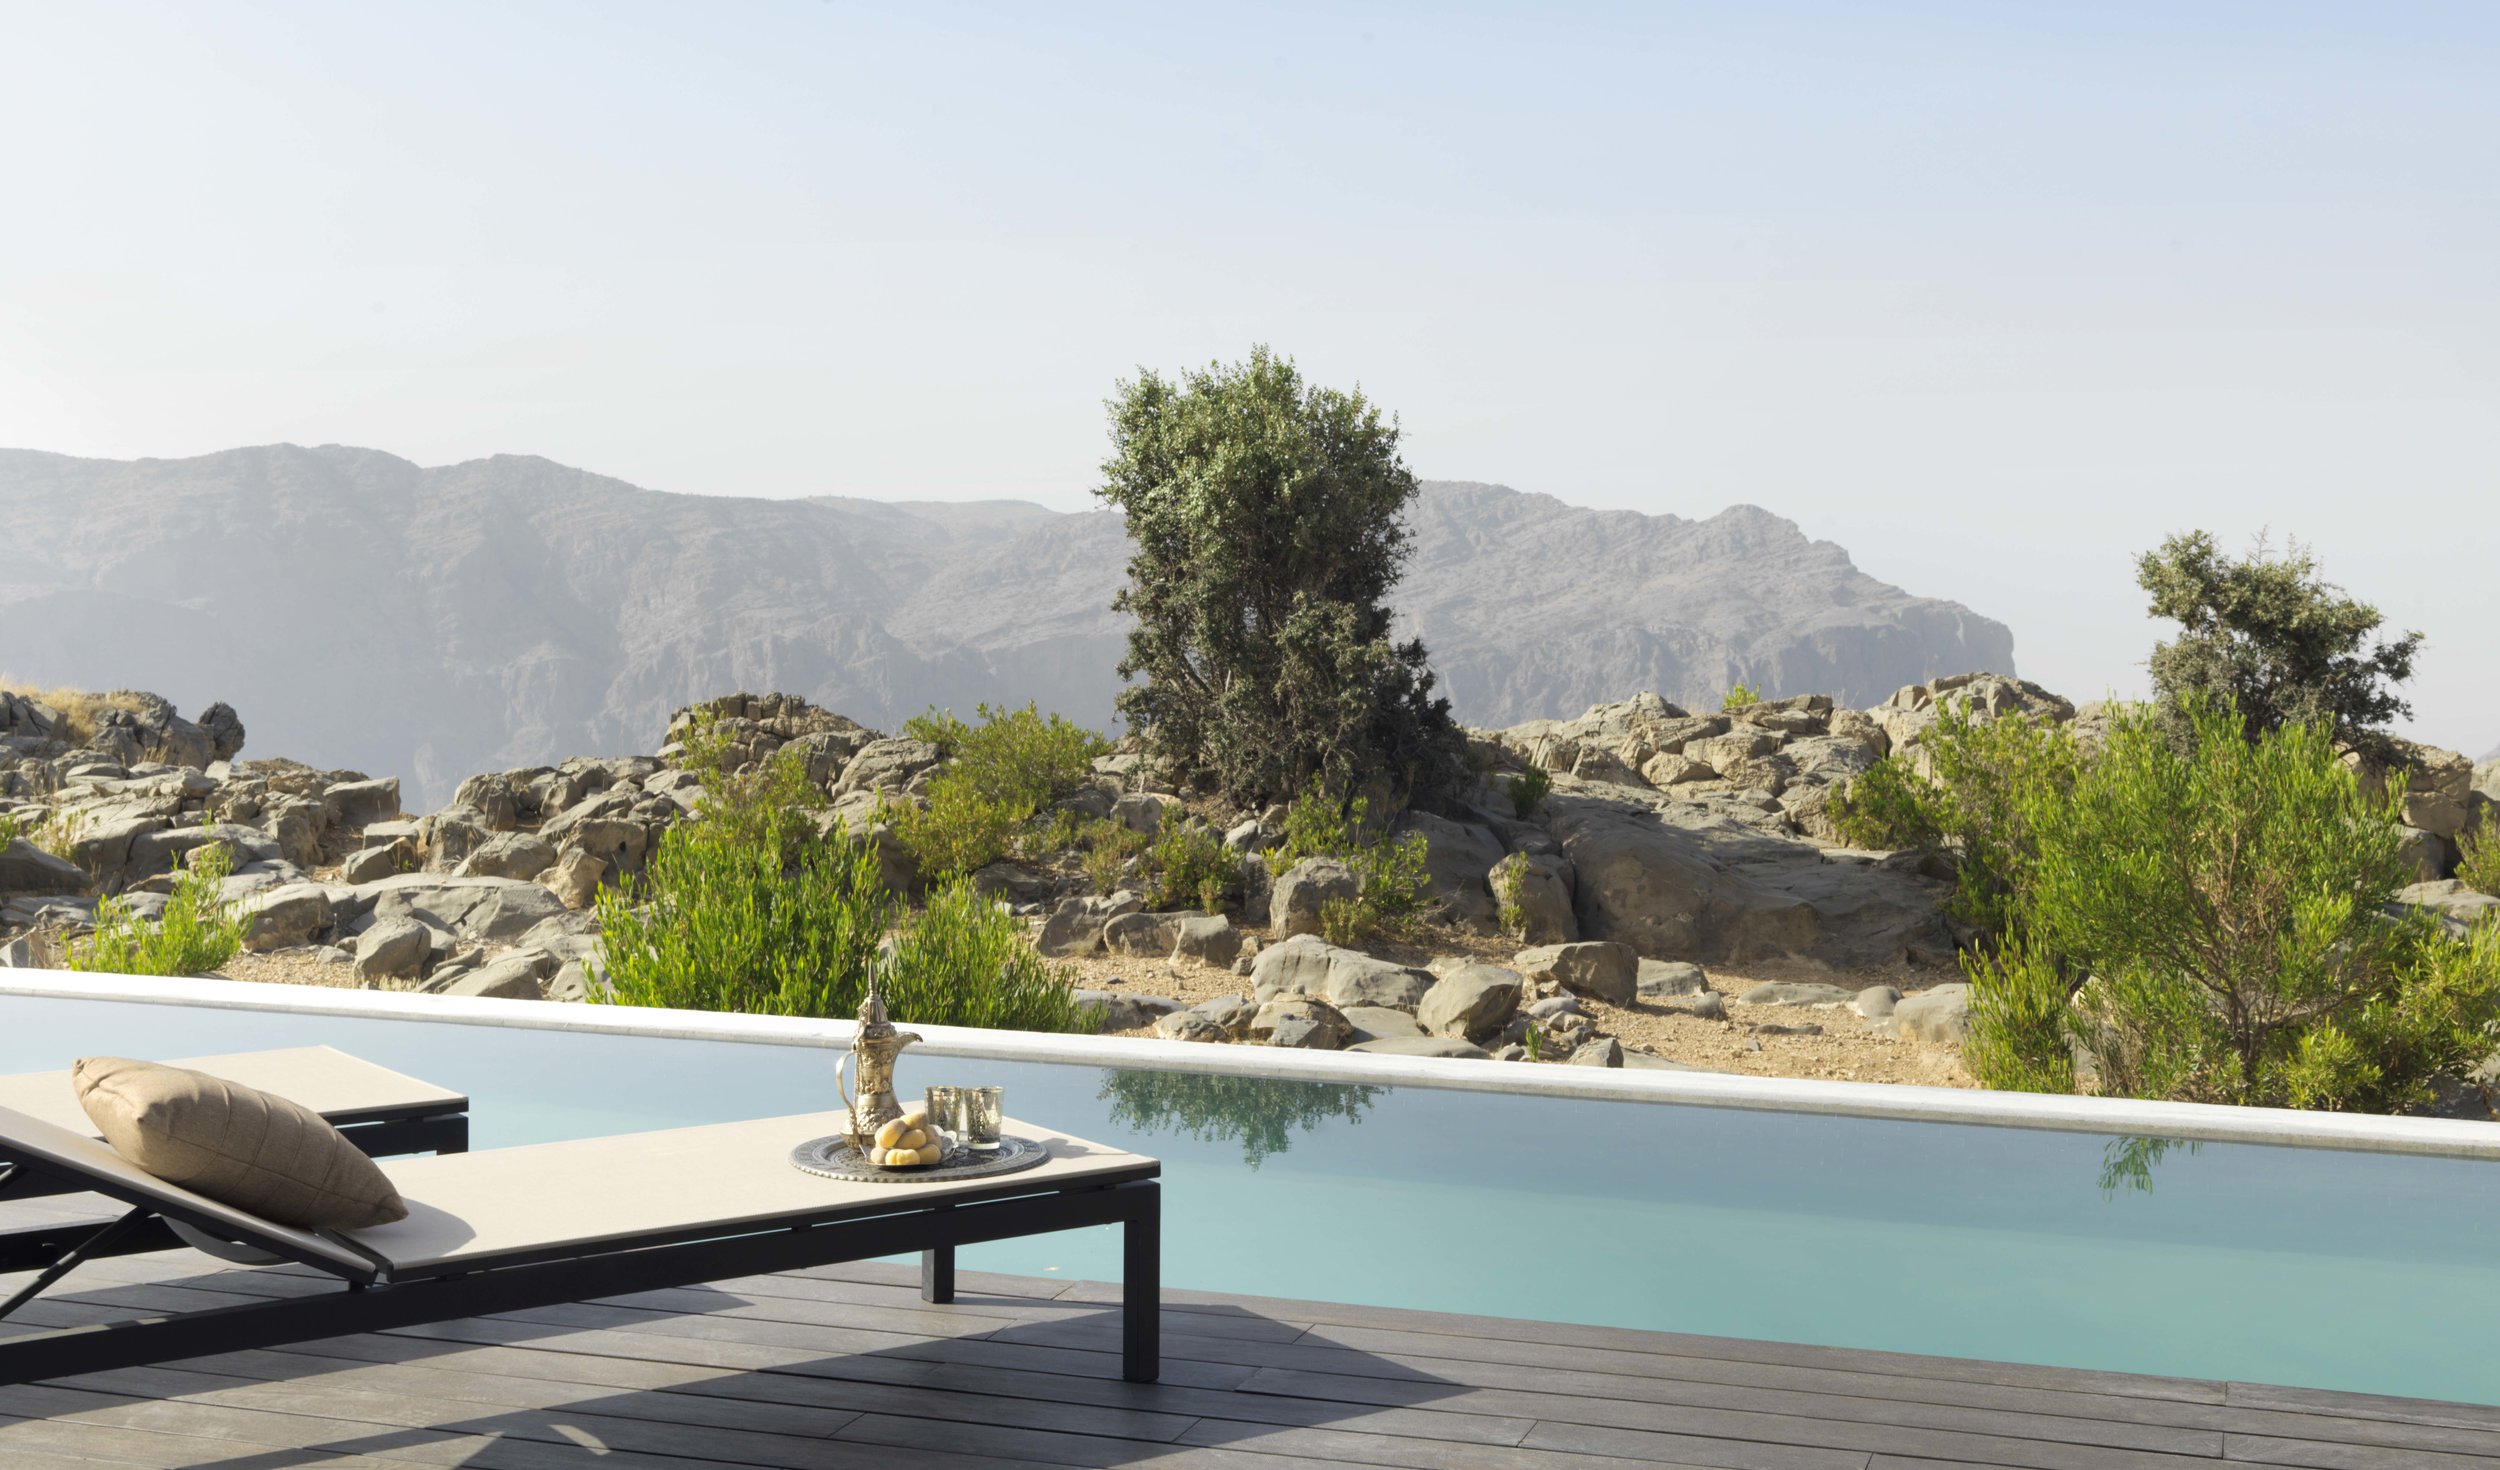 Anantara Al Jabal Al Akhdar Resort - Cliff Pool Villa Pool View 02 (2).jpg